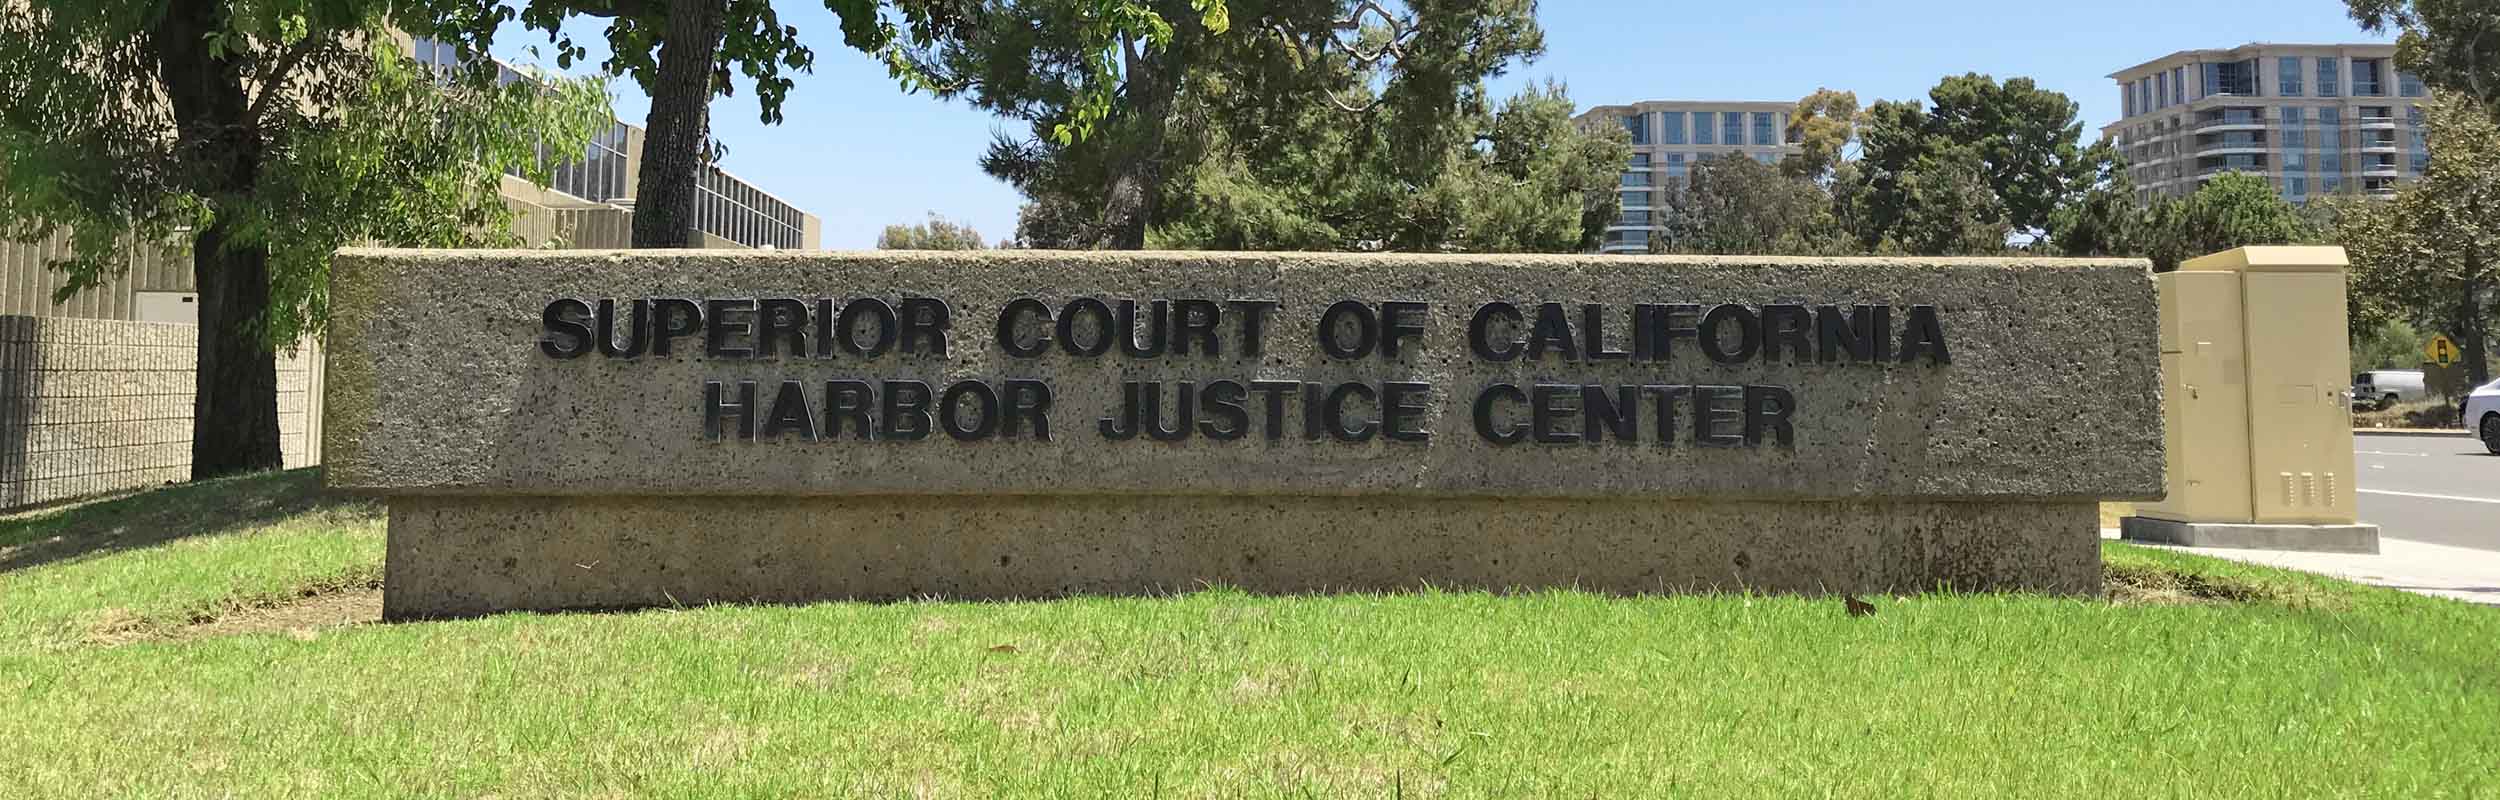 Harbor-Justice-Center-Court-Process-Explained.jpg